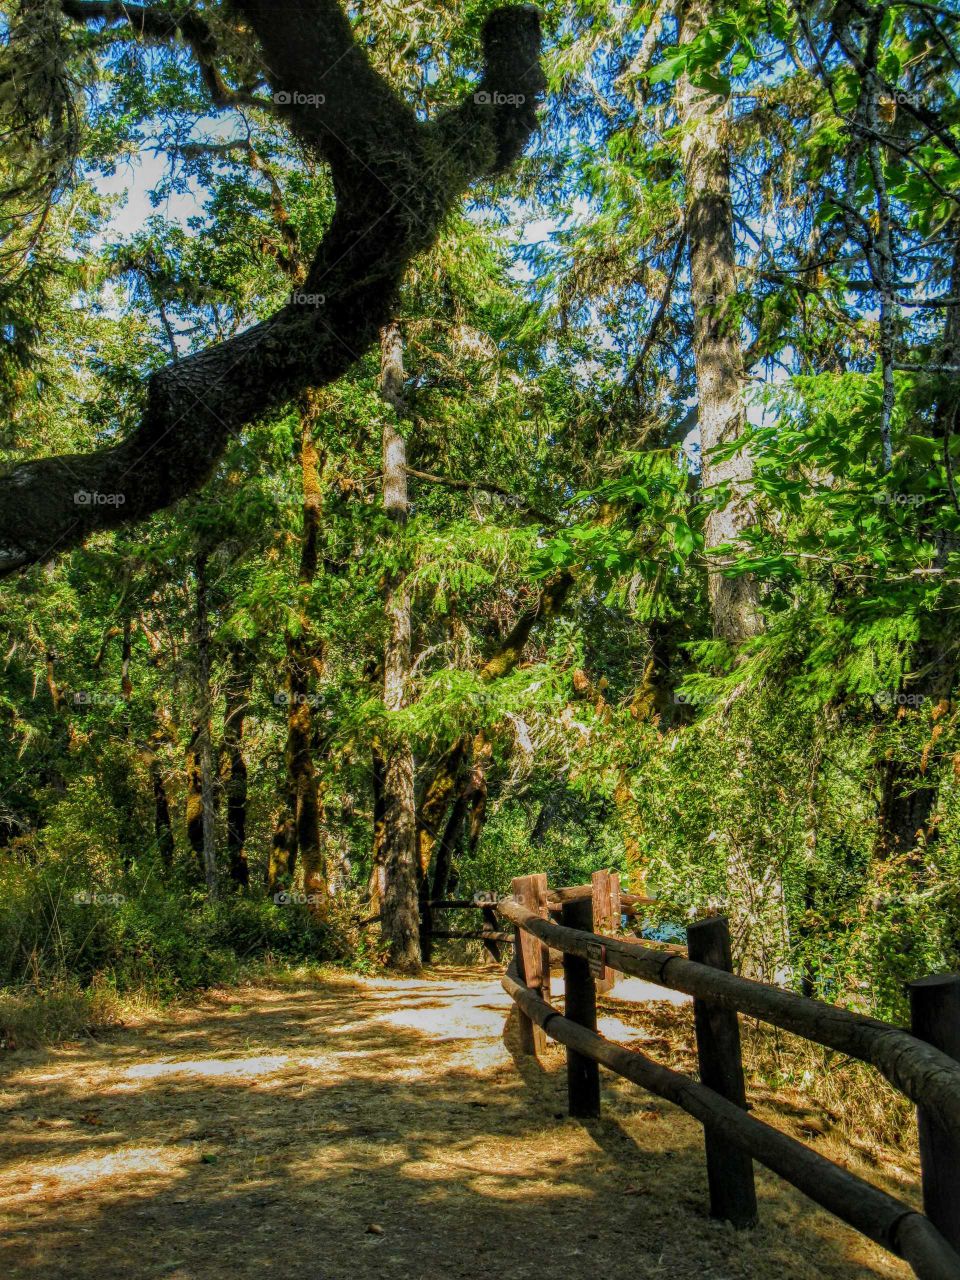 Scerene Forest Pathway "Lush Green Walk"